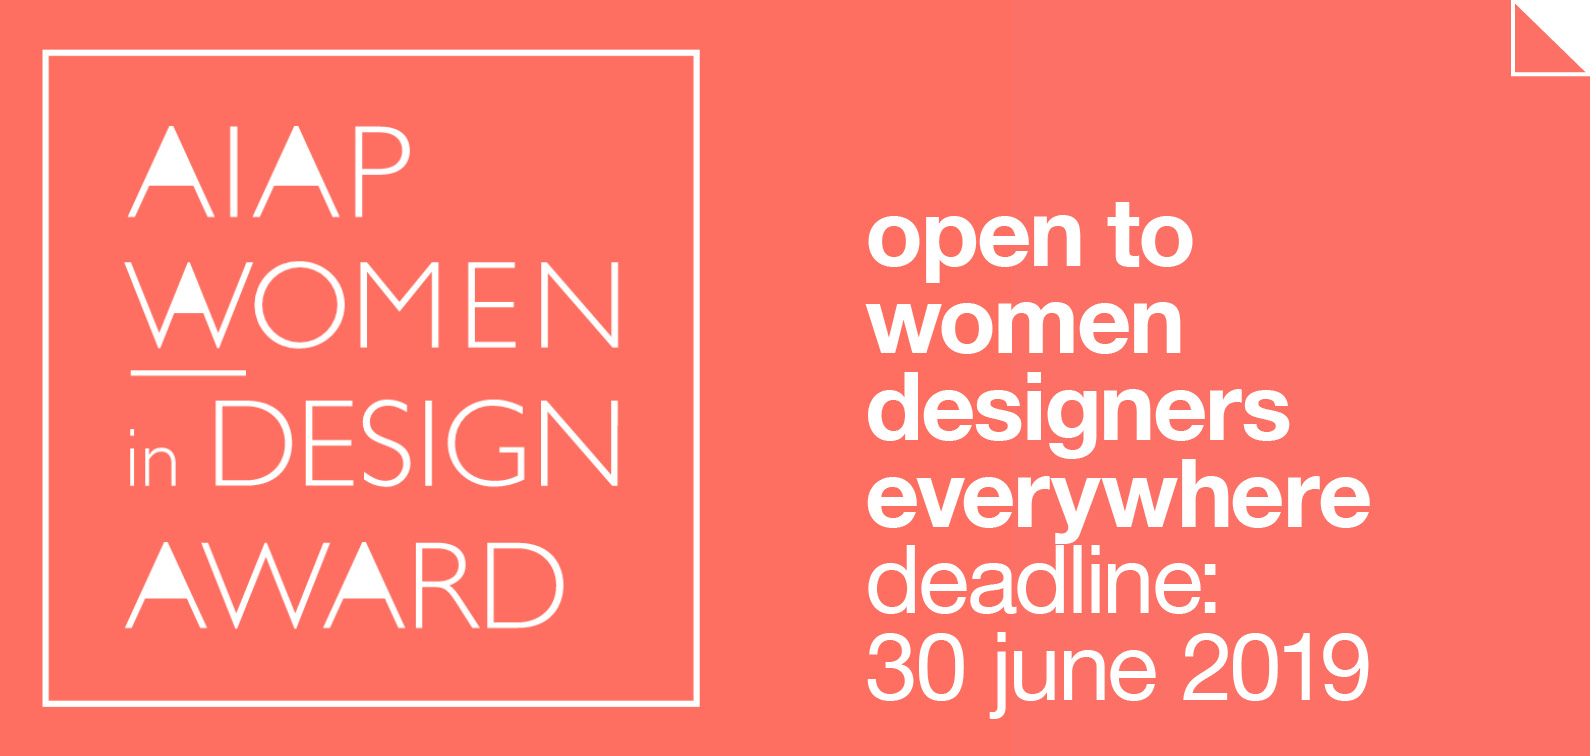 AIAP women in design award 2019 edition is open!